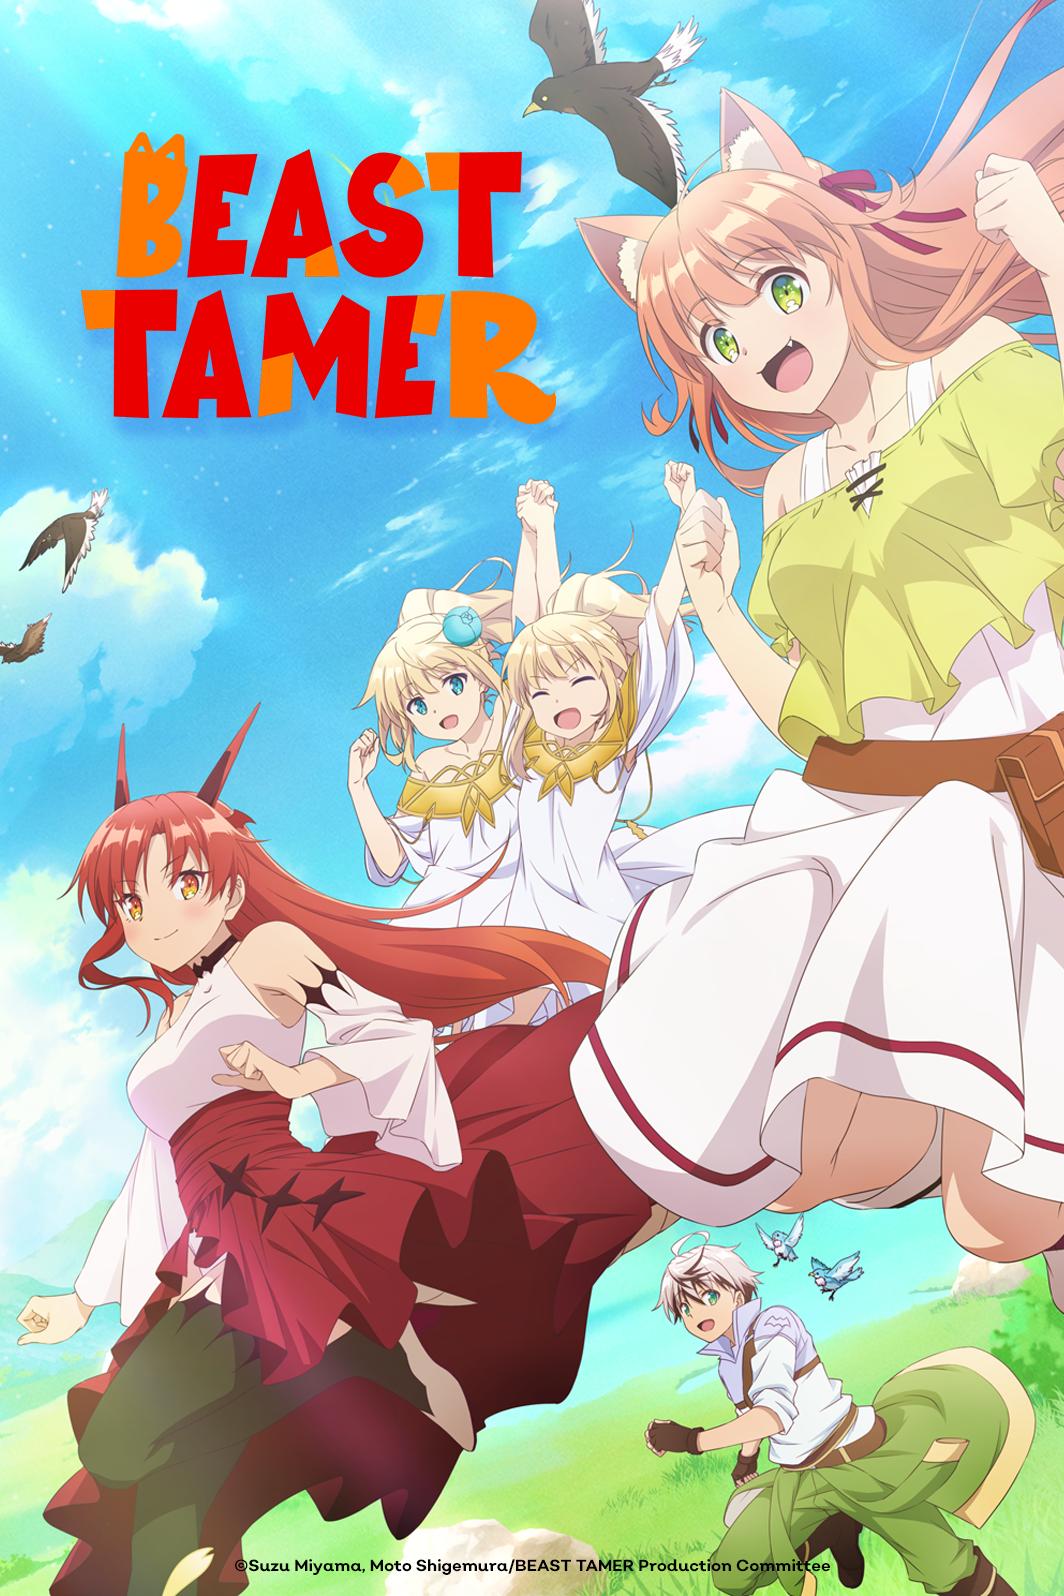 TV ratings for Beast Tamer (勇者パーティーを追放されたビーストテイマー、最強種の猫耳少女と出会う) in Denmark. Tokyo MX TV series